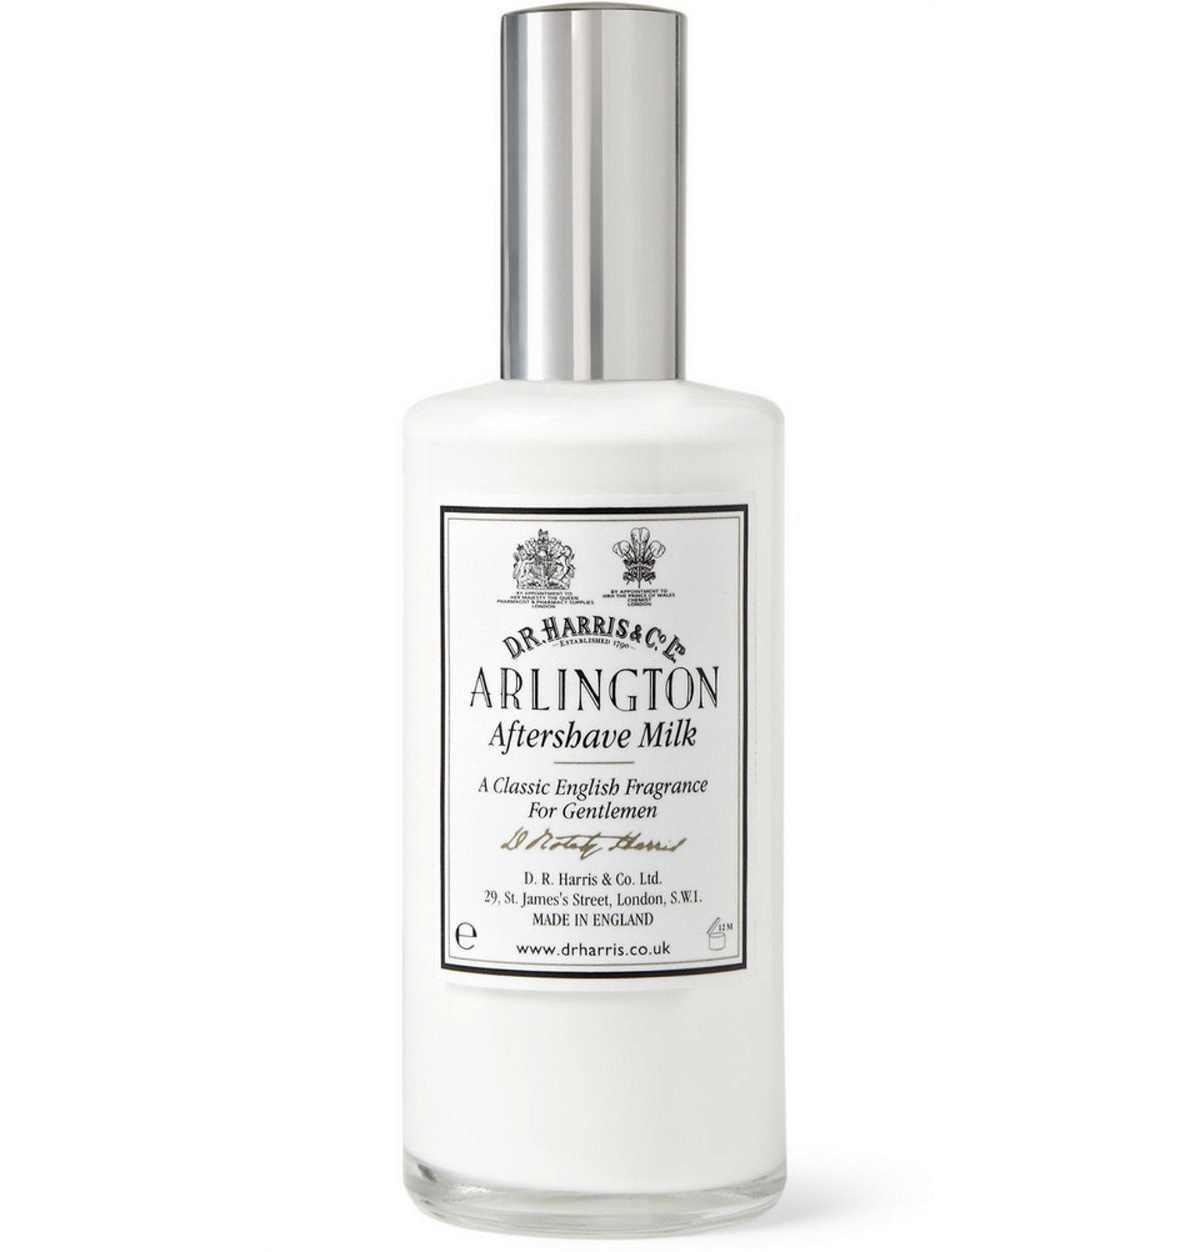 D R Harris - Arlington Aftershave Milk, 100ml - Colorless